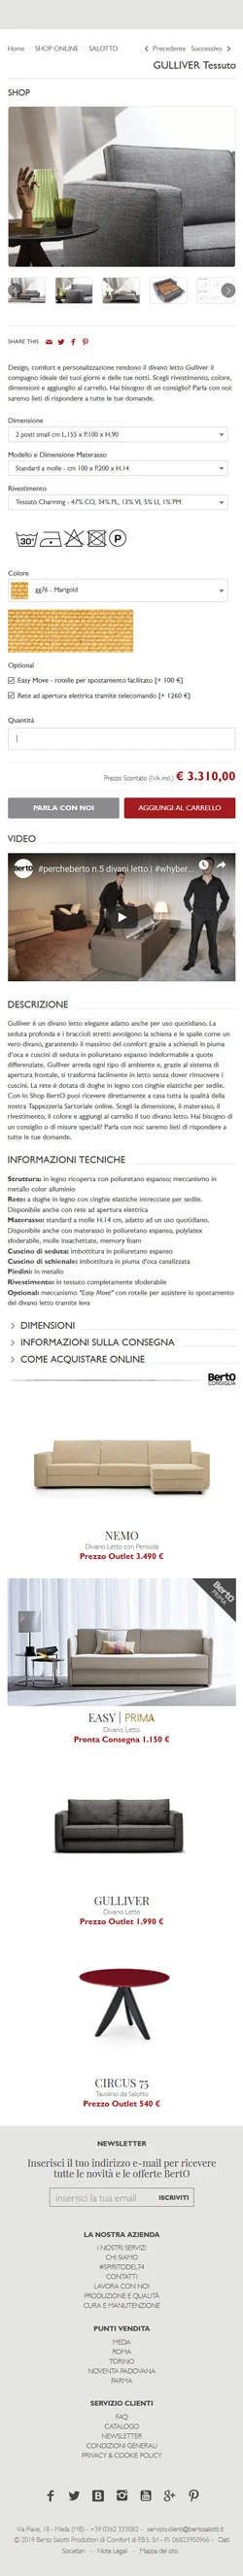 Berto Salotti - responsive ecommerce web design